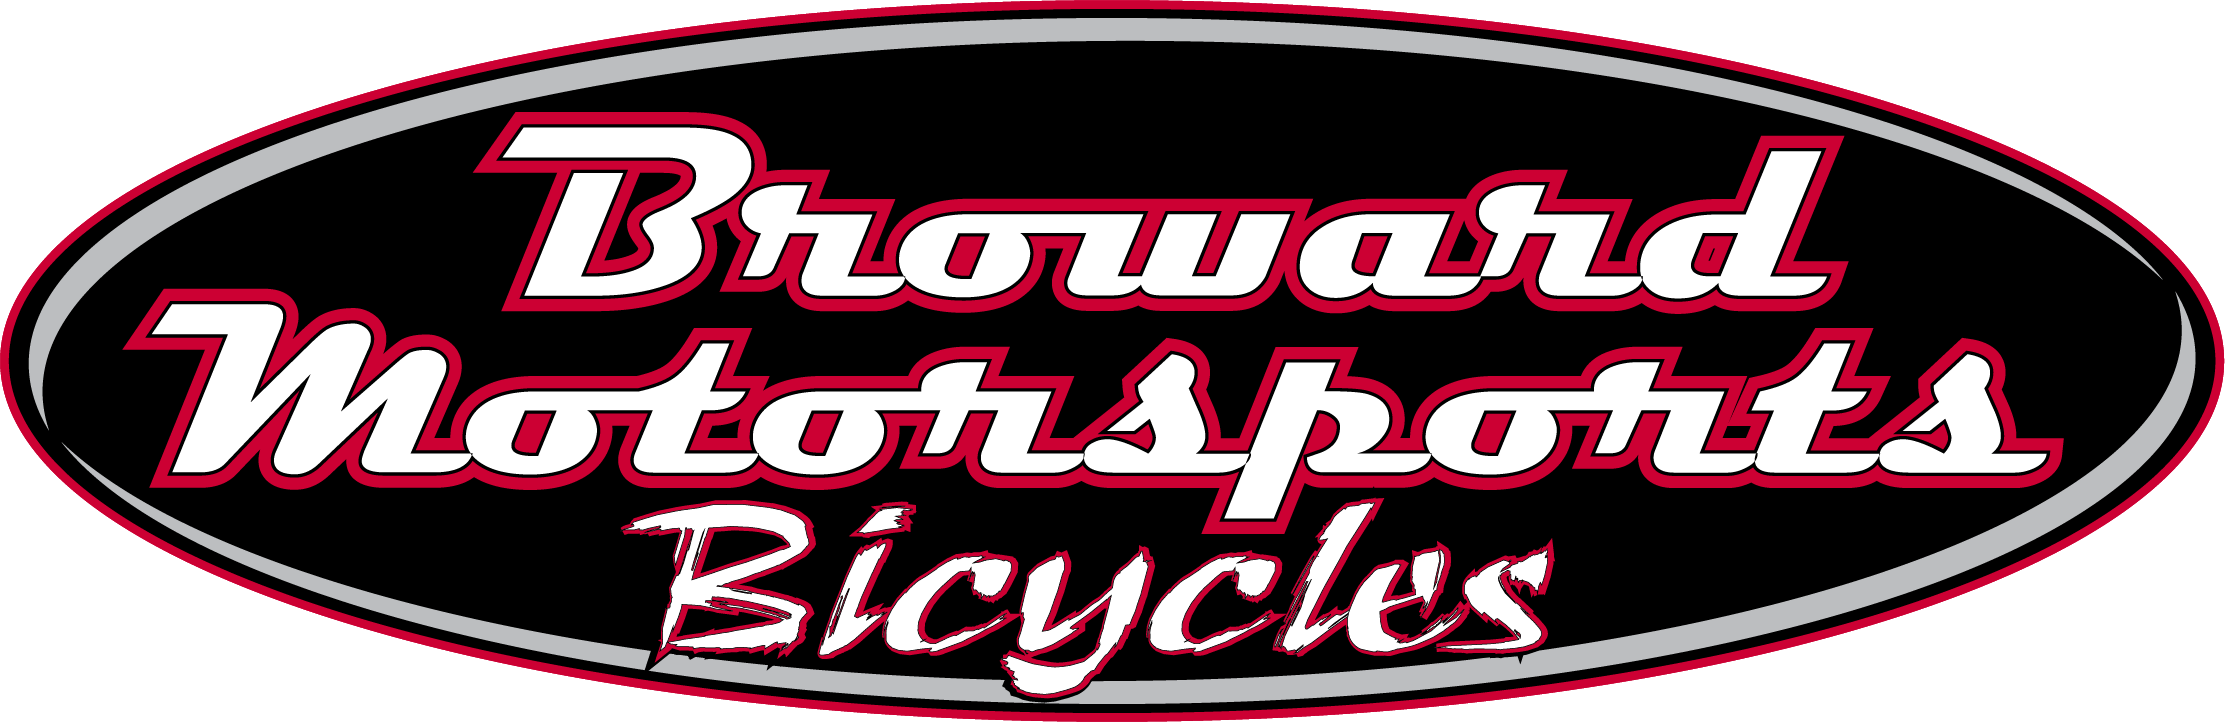 Broward Motorsports Bicycles Home Page